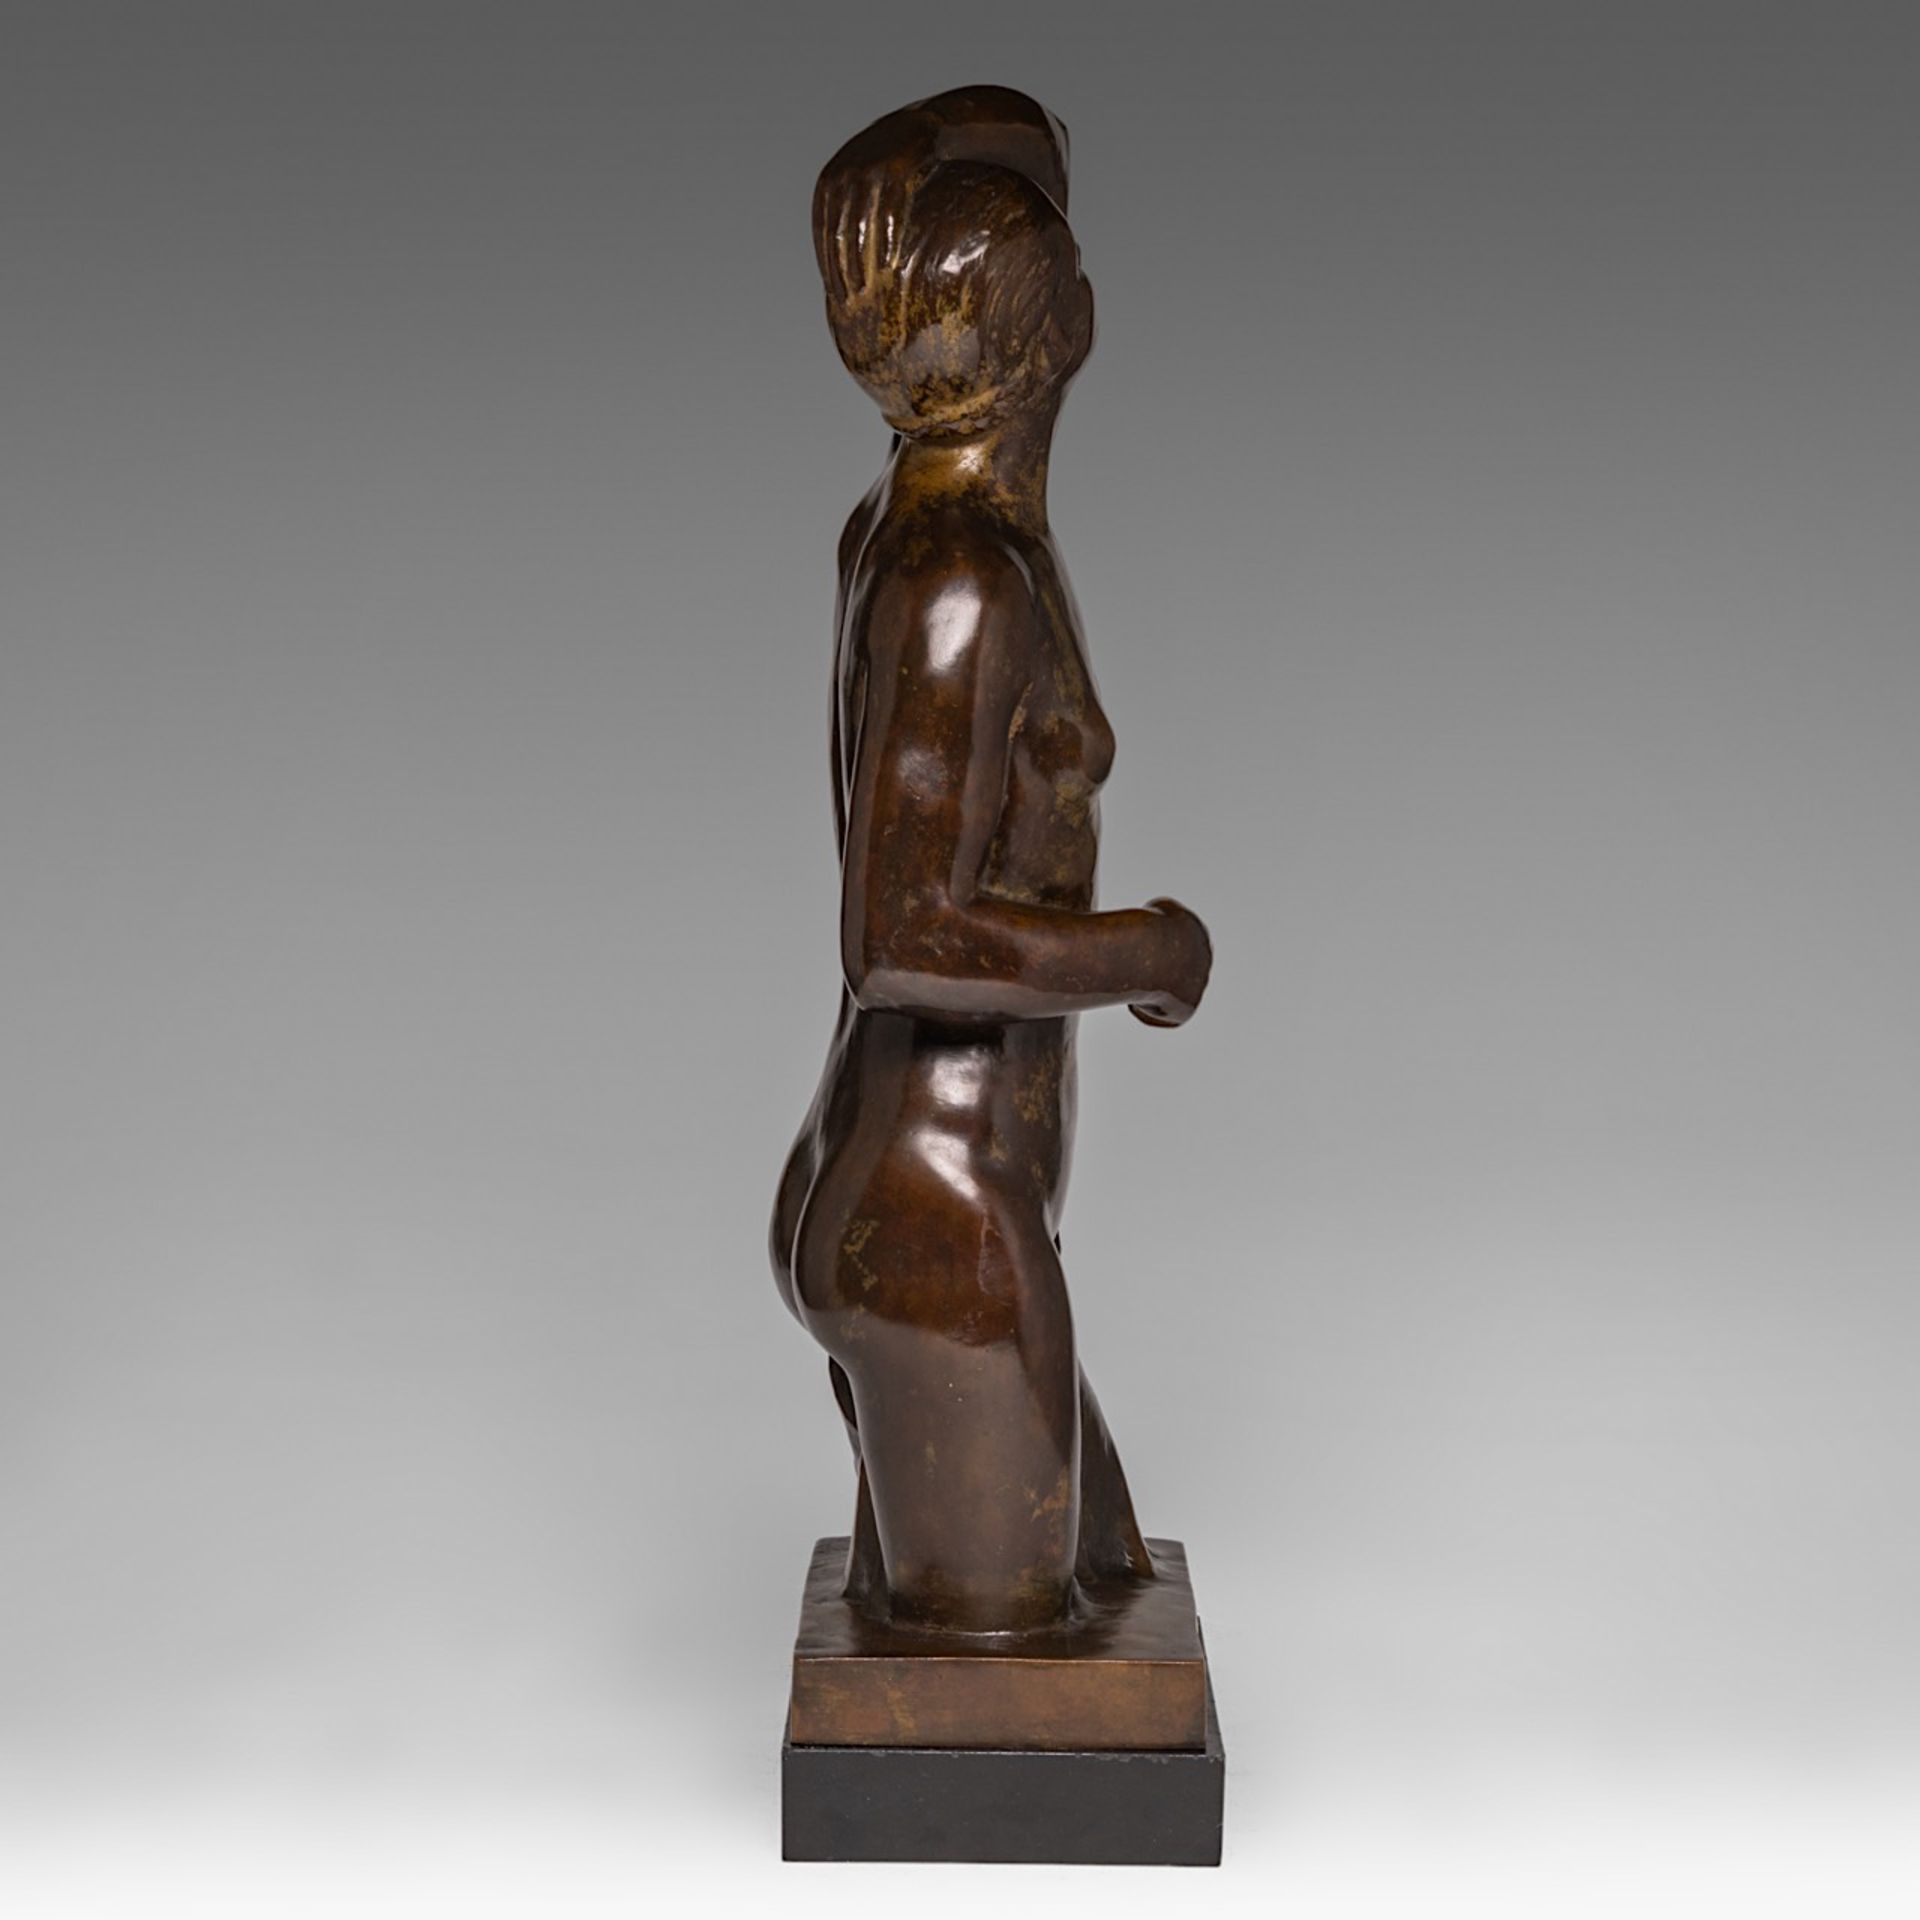 Leon Sarteel (1882-1942), Baigneuse, patinated bronze, casted by G. Vindevogel, Zwijnaarde, H 58 cm - Bild 6 aus 7